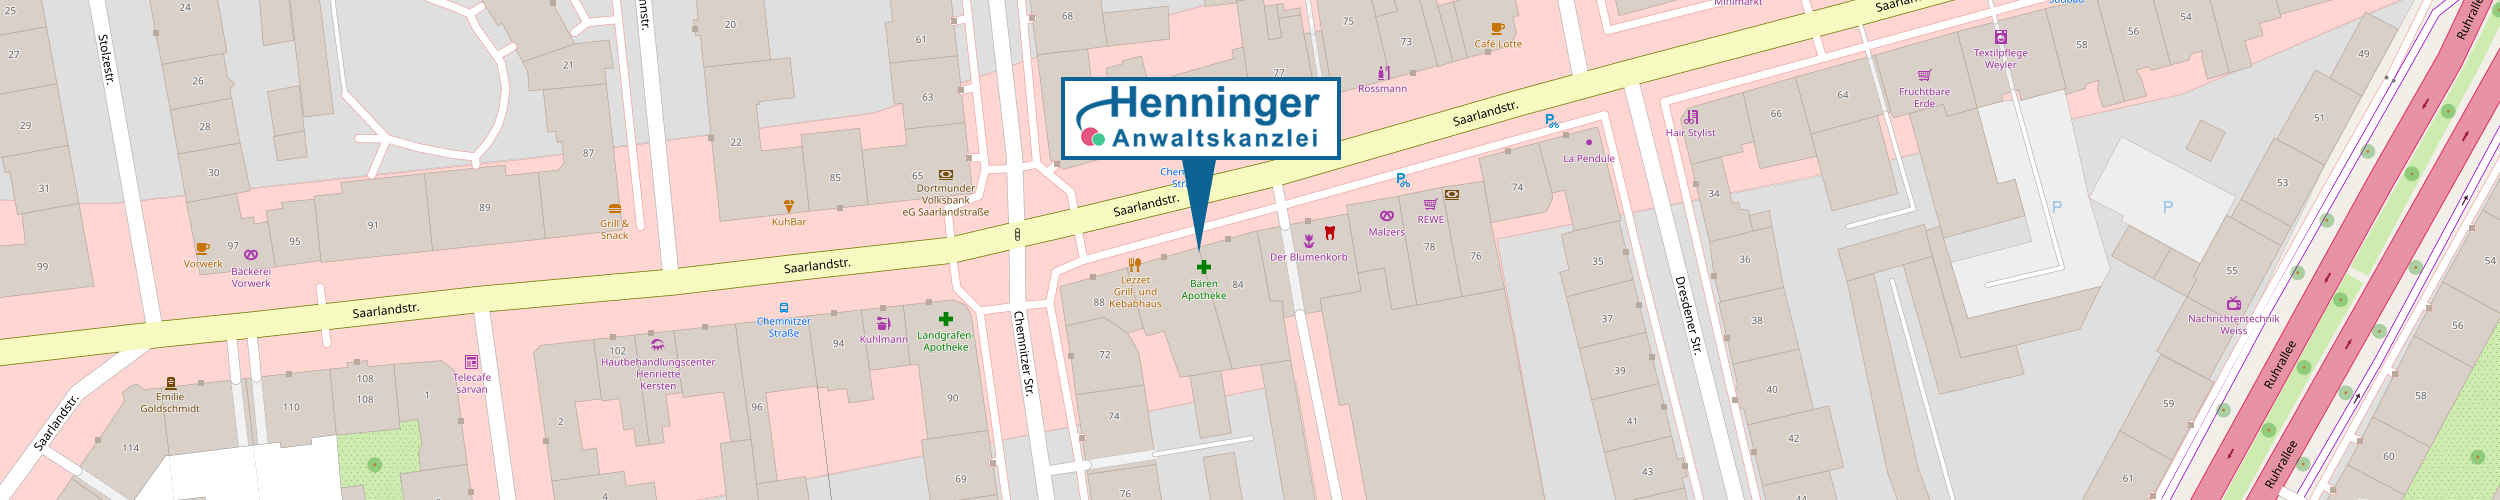 Kartenausschnitt Kanzlei Henninger Dortmund